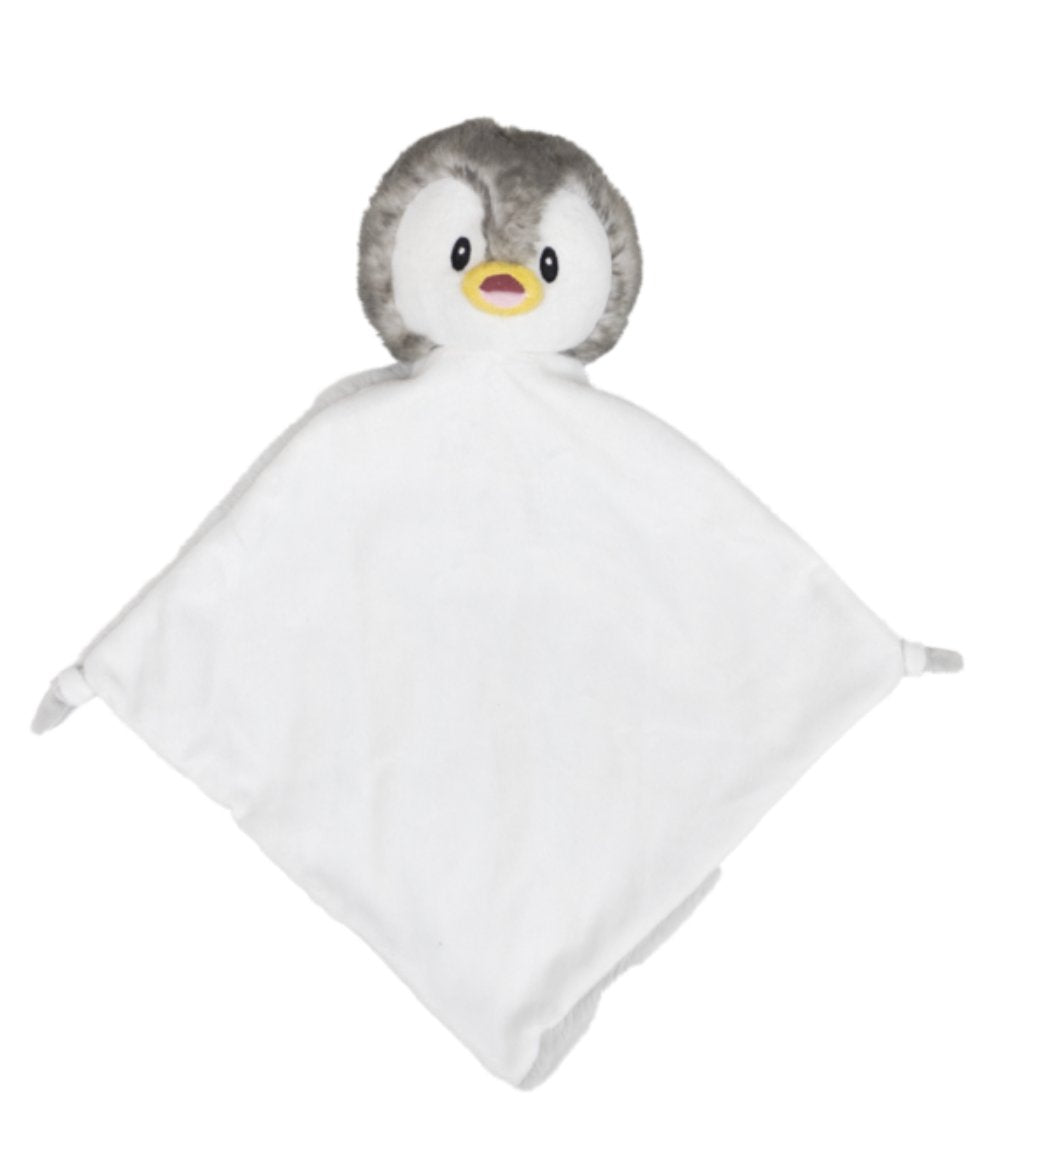 Cubbies baby penguin comforter - Personalise me